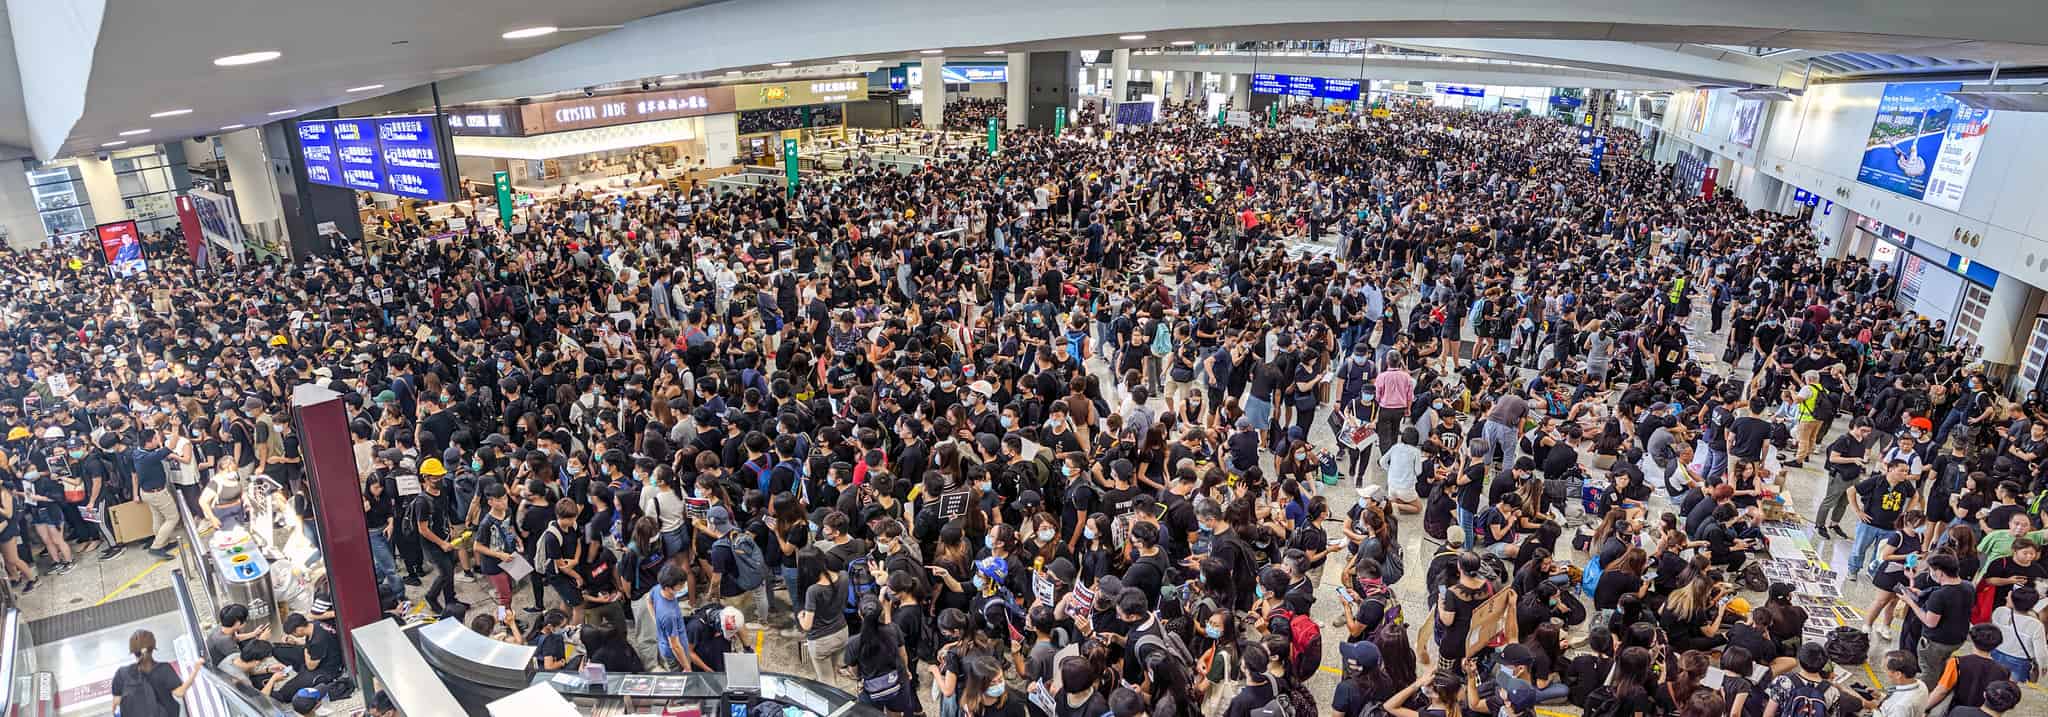 Pro-democracy protest at Hong Kong International airport. August 2019